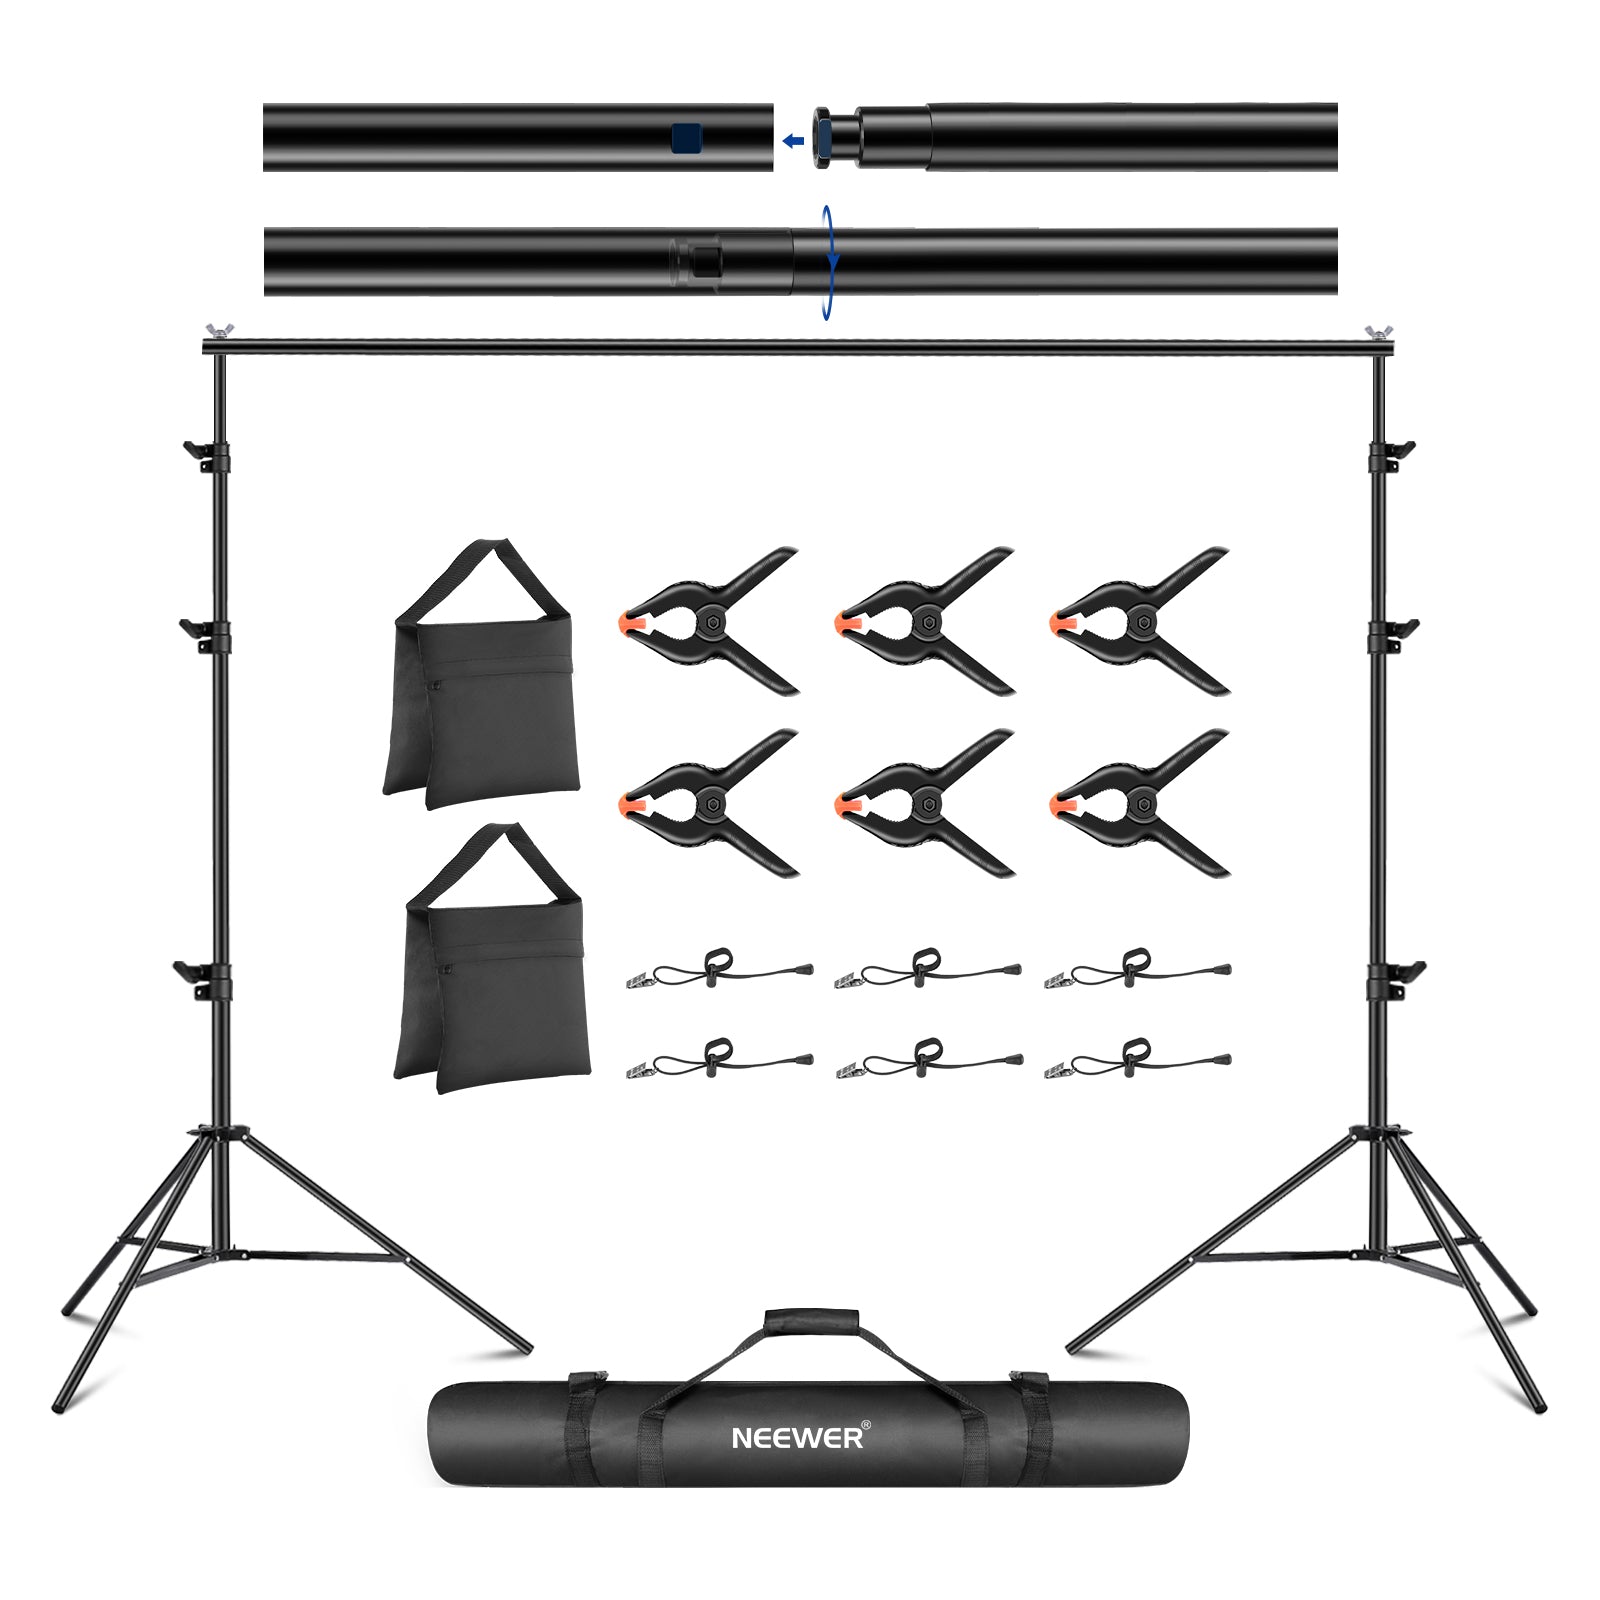 NEEWER 8.5x10ft Adjustable Backdrop Stand Kit